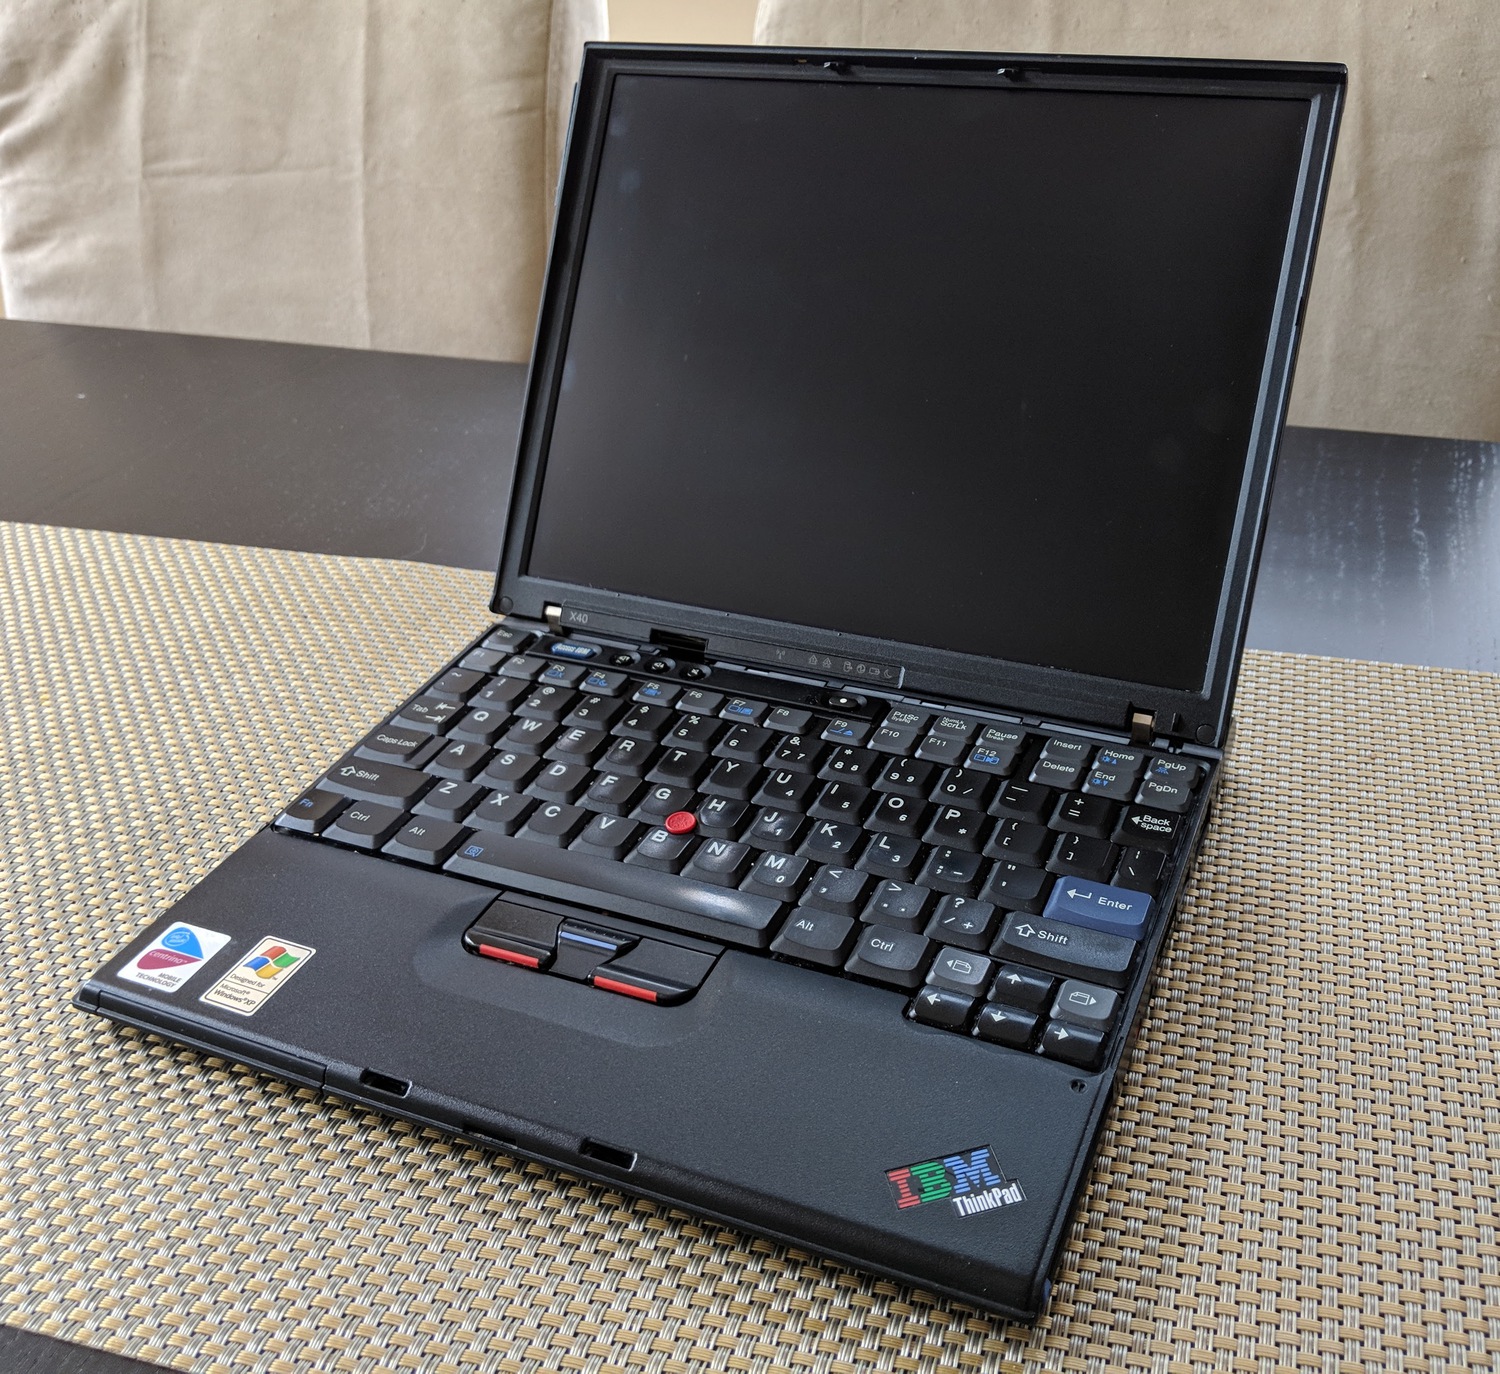 ThinkPad X40, powered off